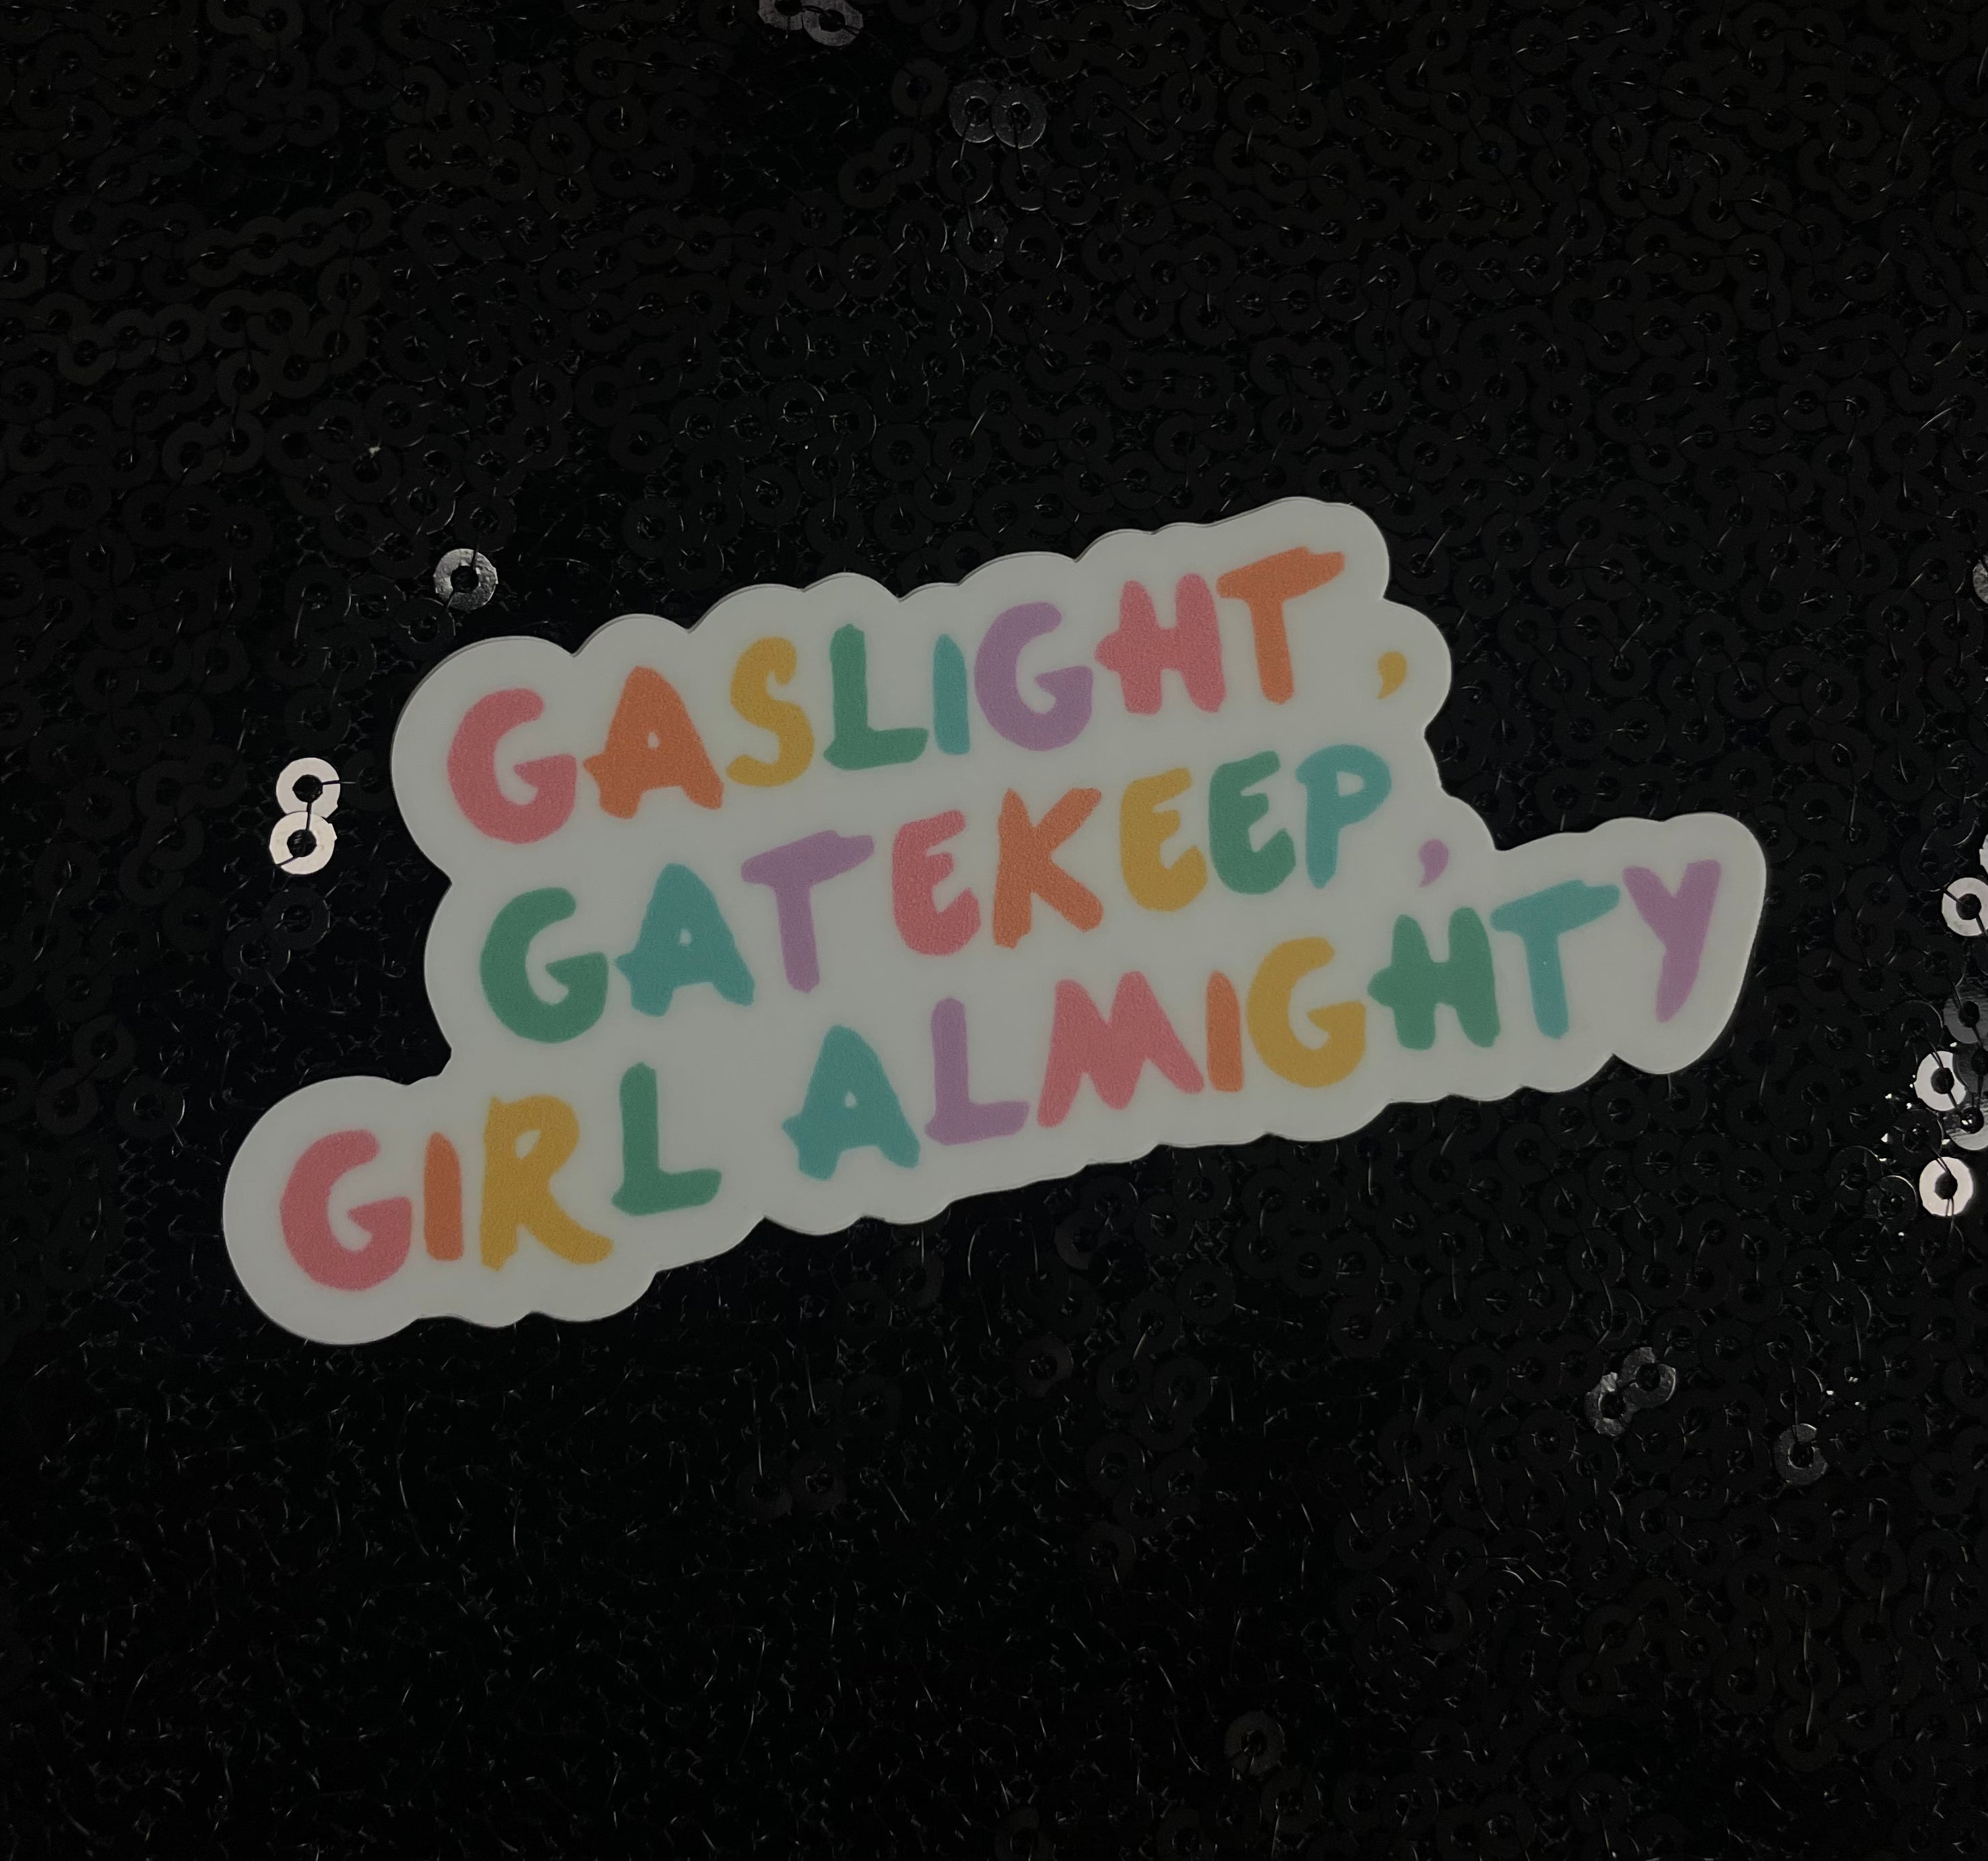 The Gaslight, Gatekeep, Girl Almighty Sticker (Rainbow